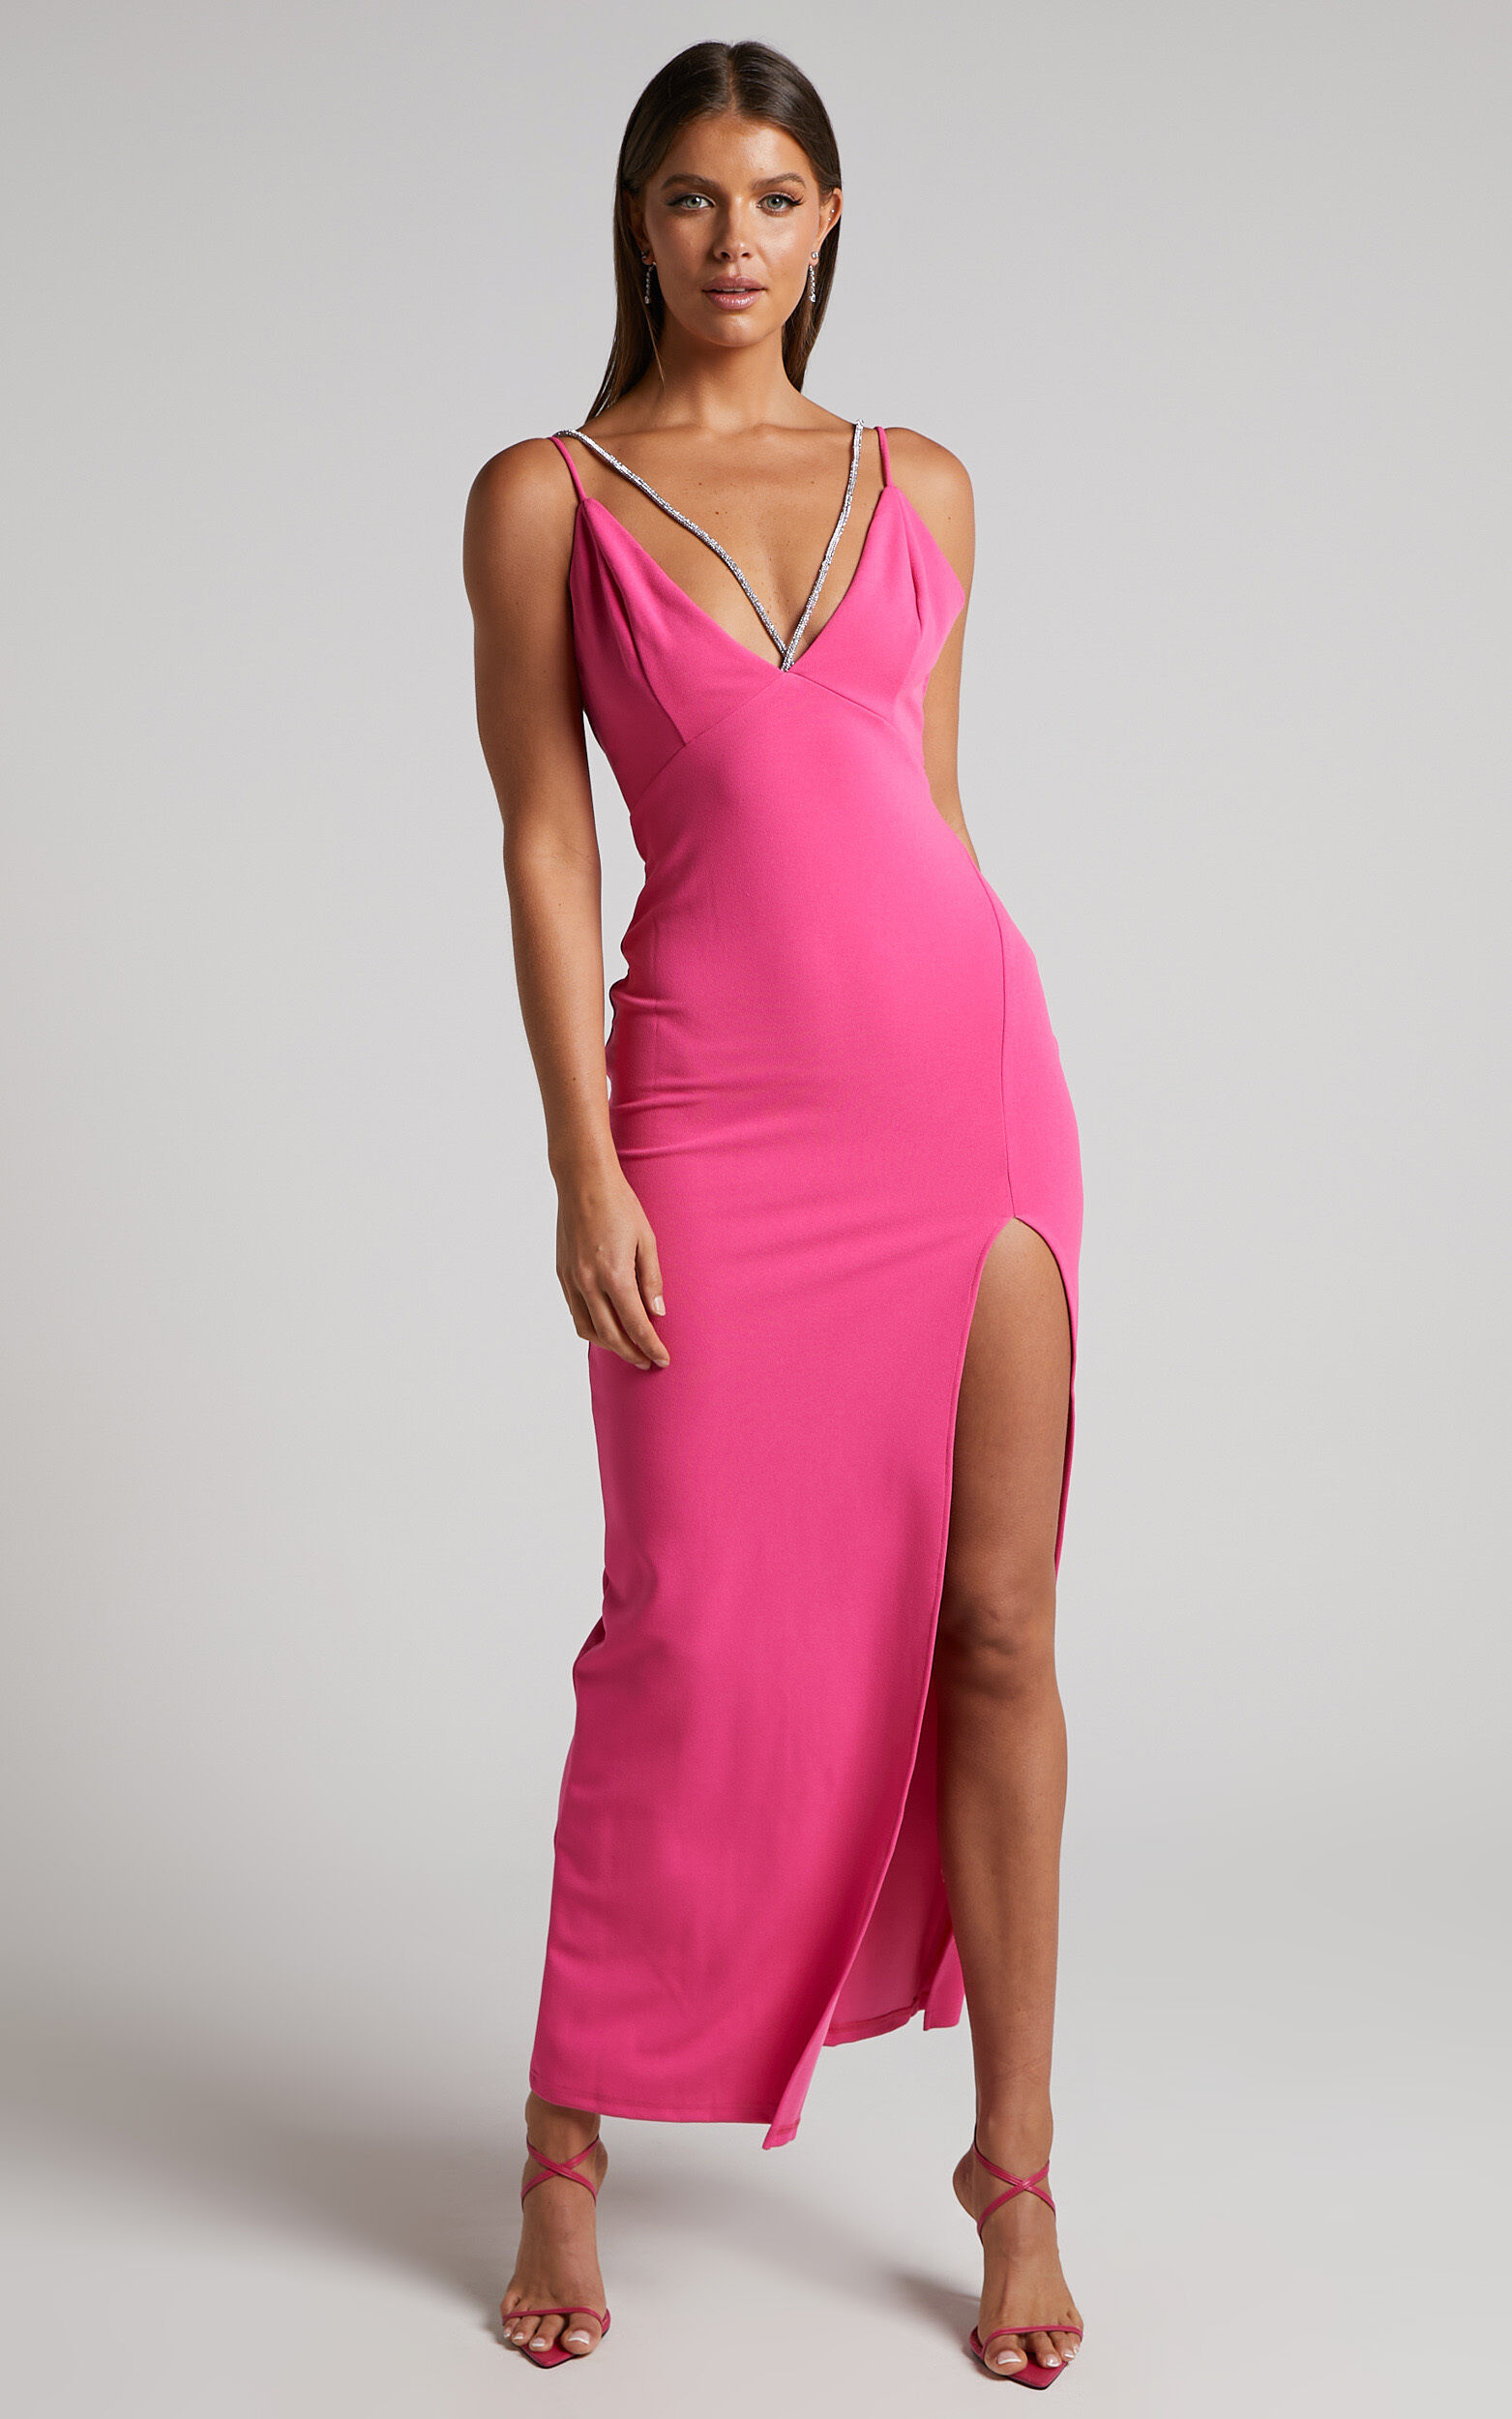 Charity Midi Dress - Diamante Strap Detail Plunge Dress in Hot Pink - 04, PNK1